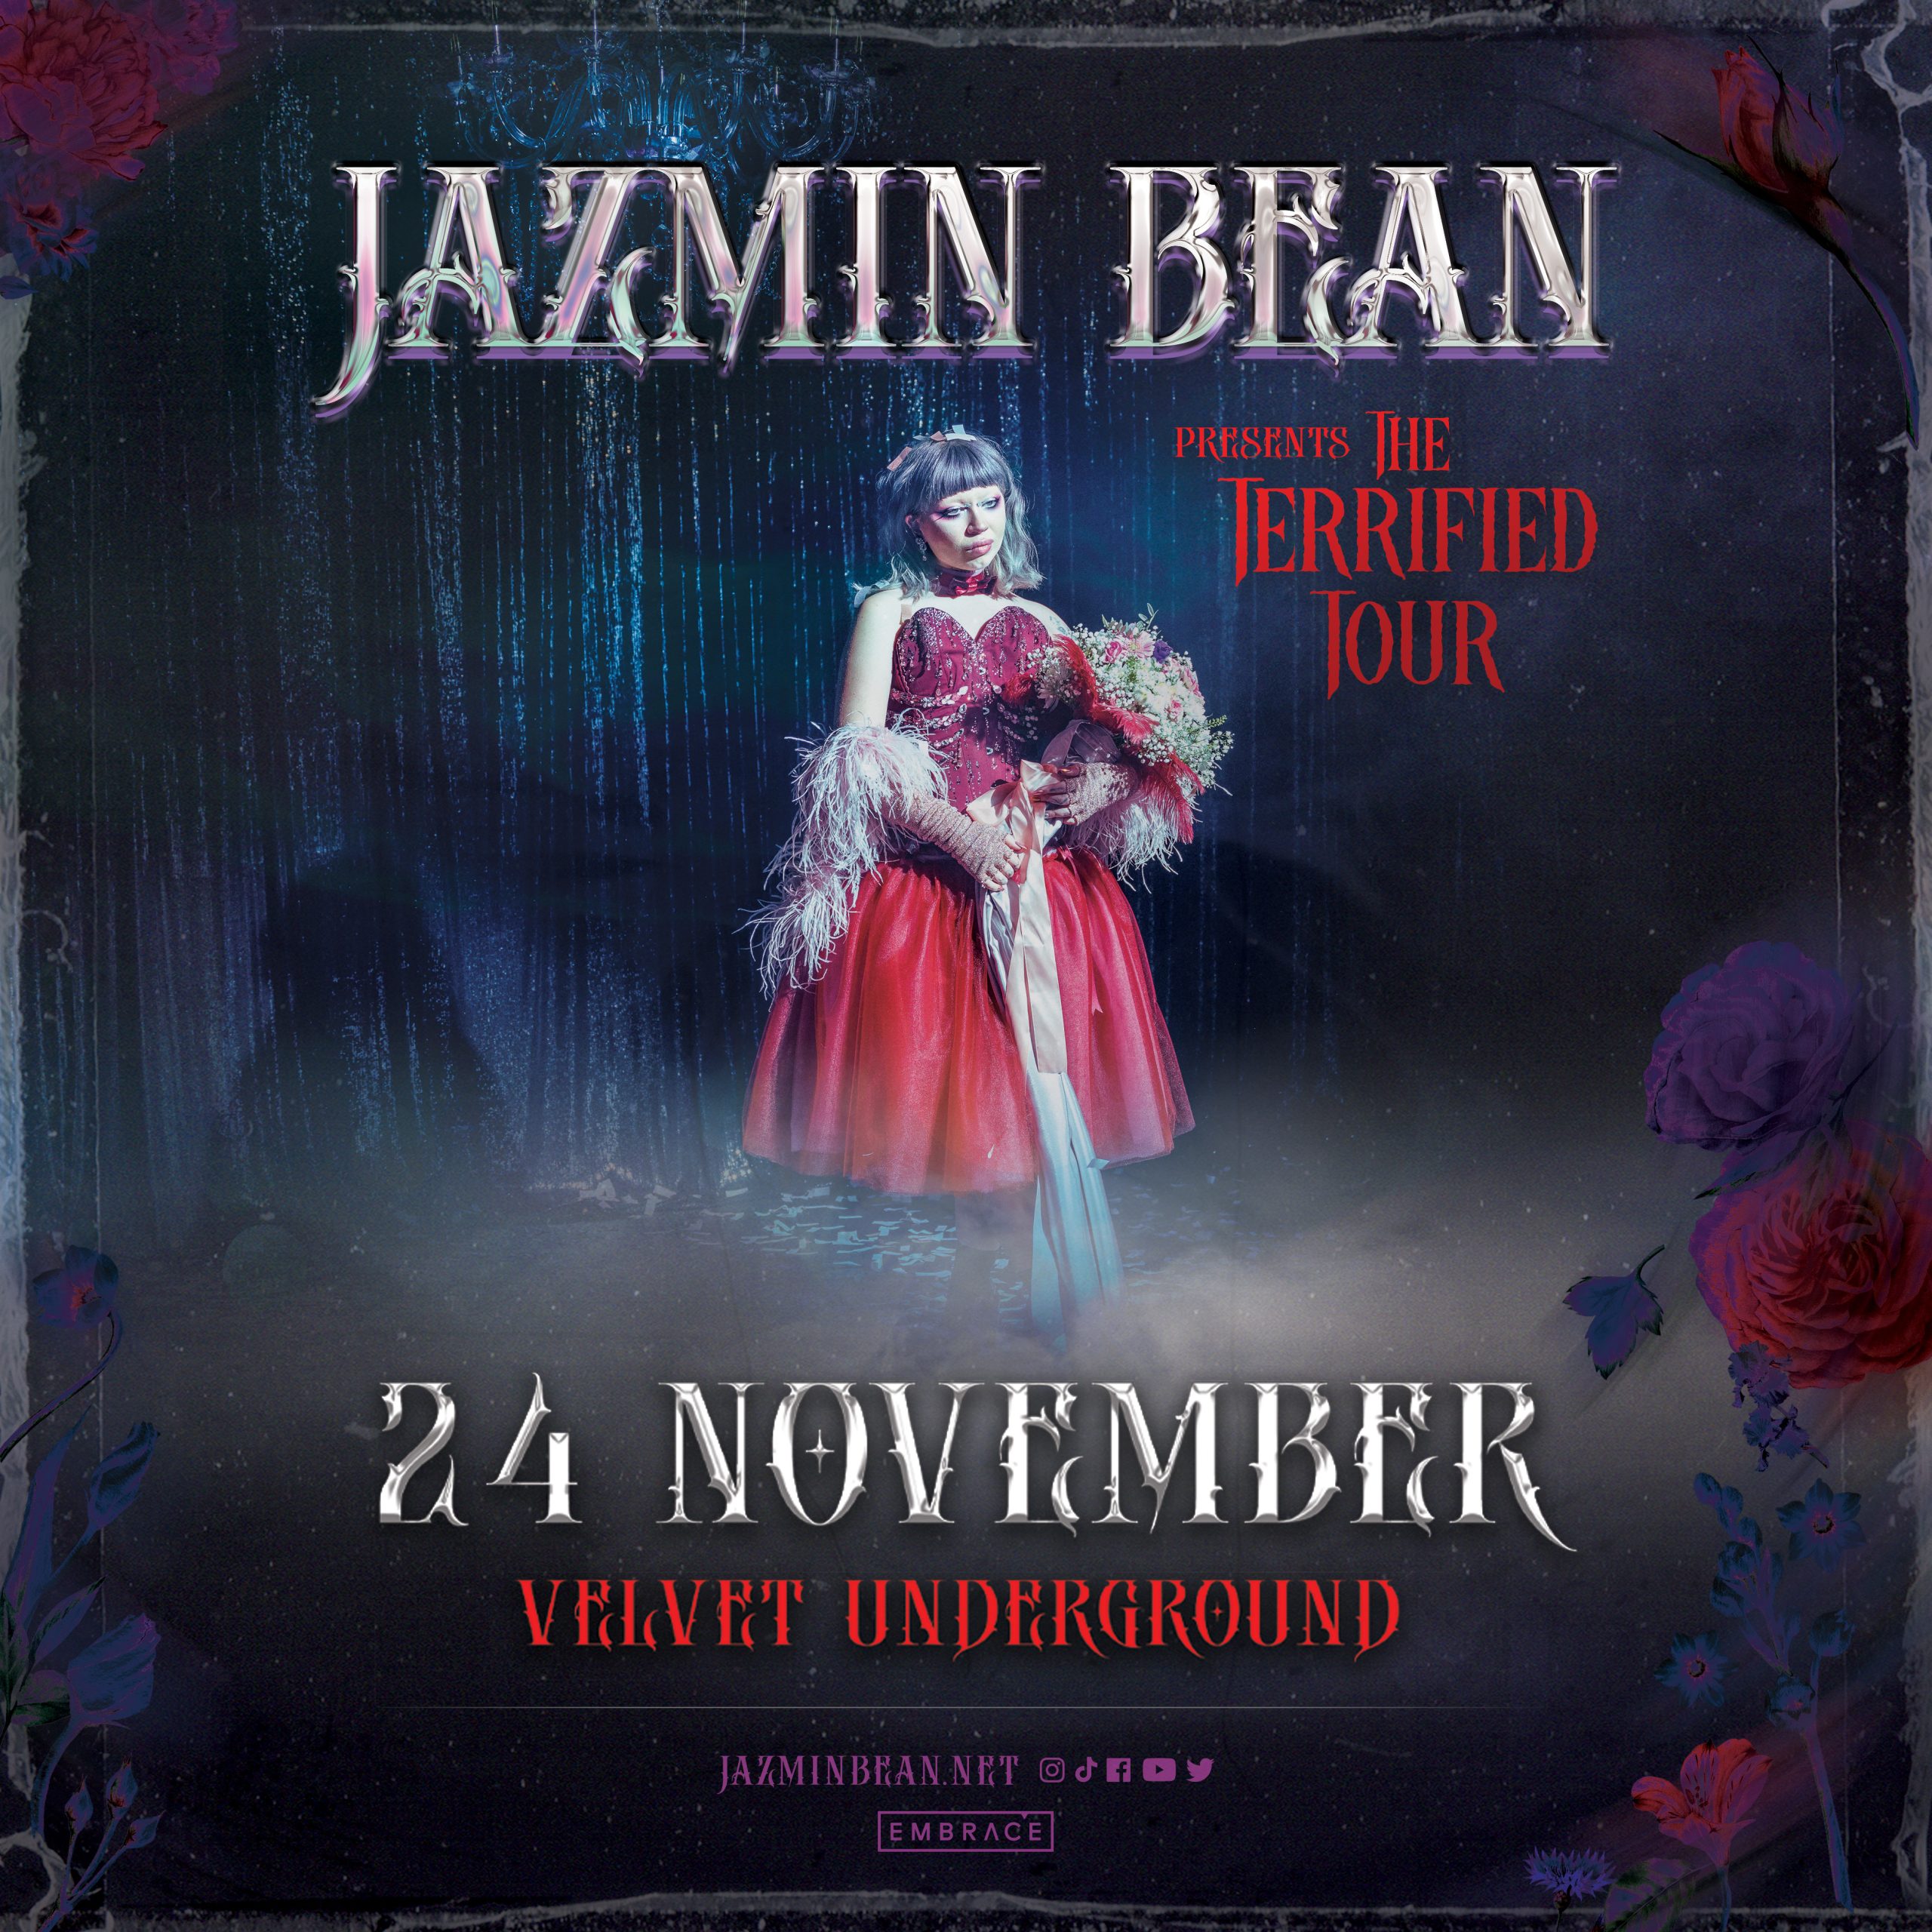 Jazmin Bean: THE TERRIFIED TOUR – Embrace Presents